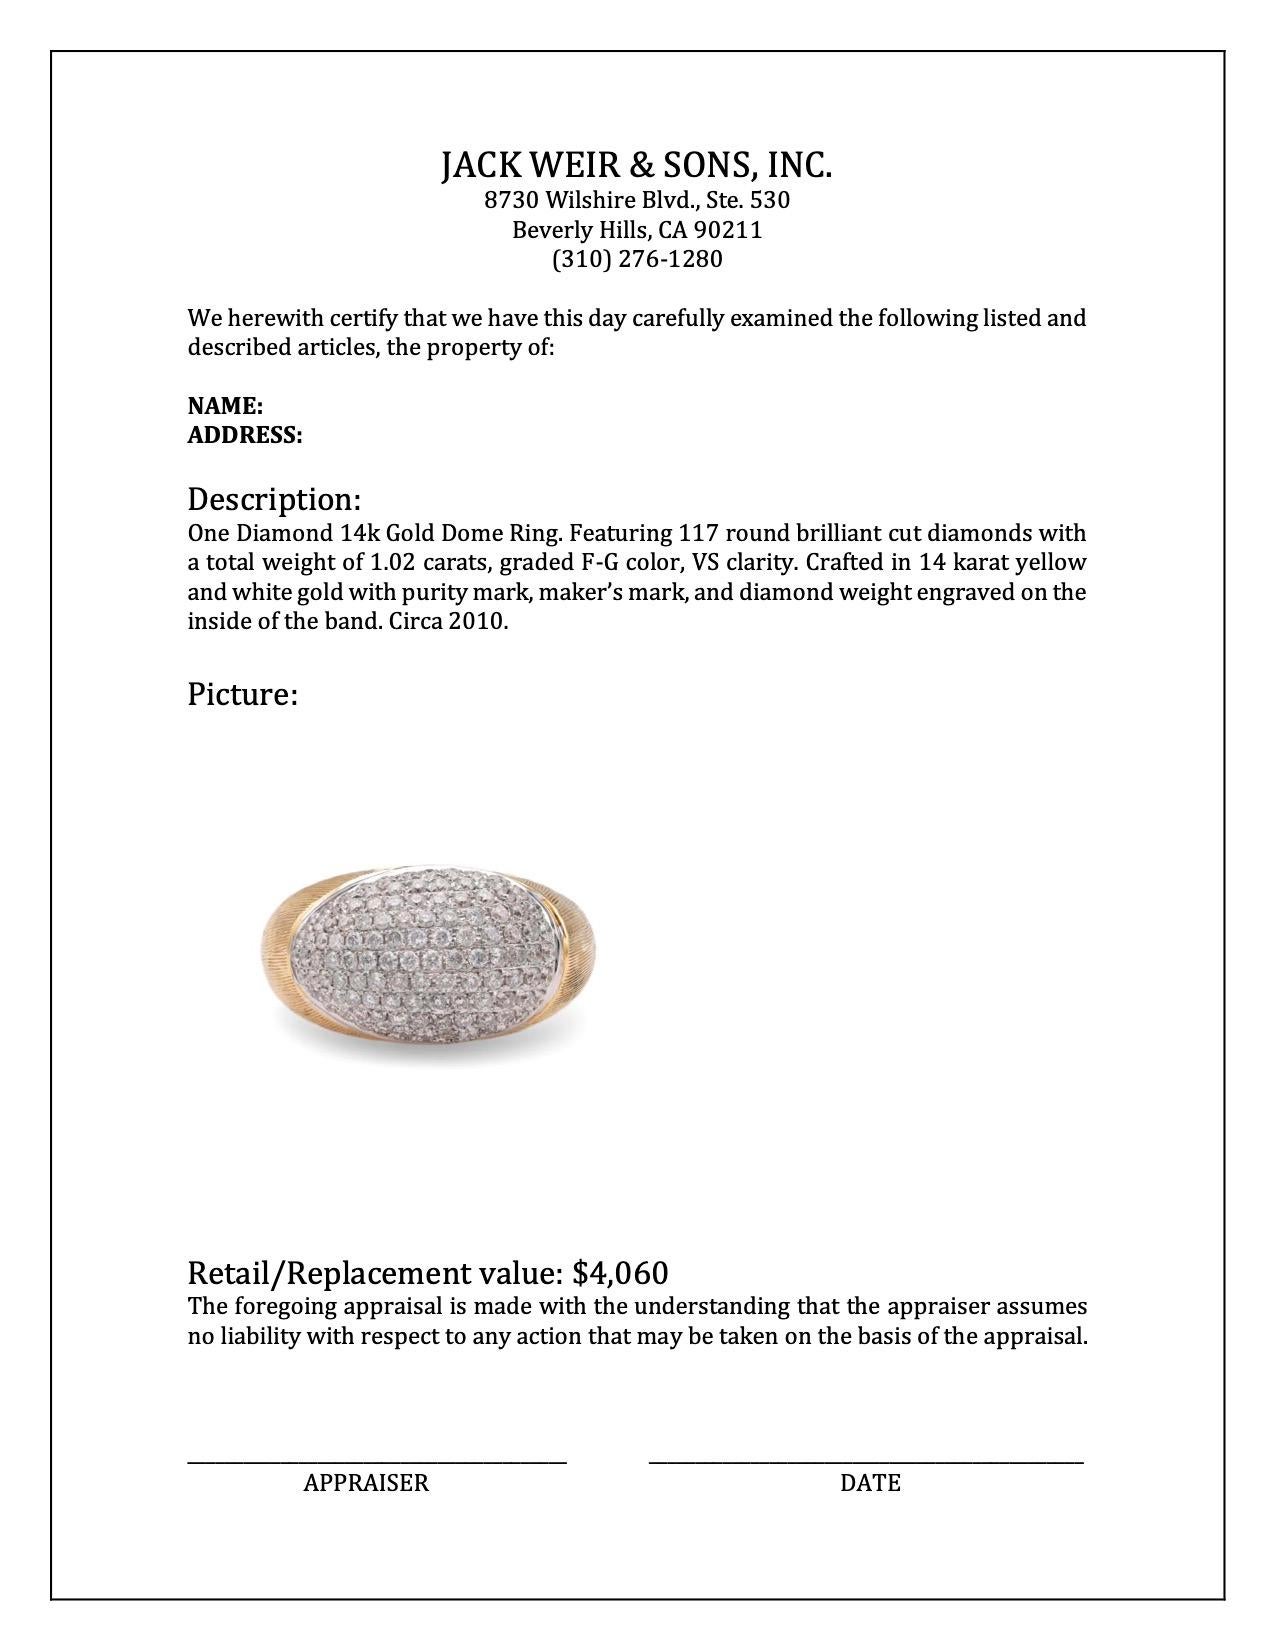 Women's or Men's Diamond 14k Gold Dome Ring For Sale